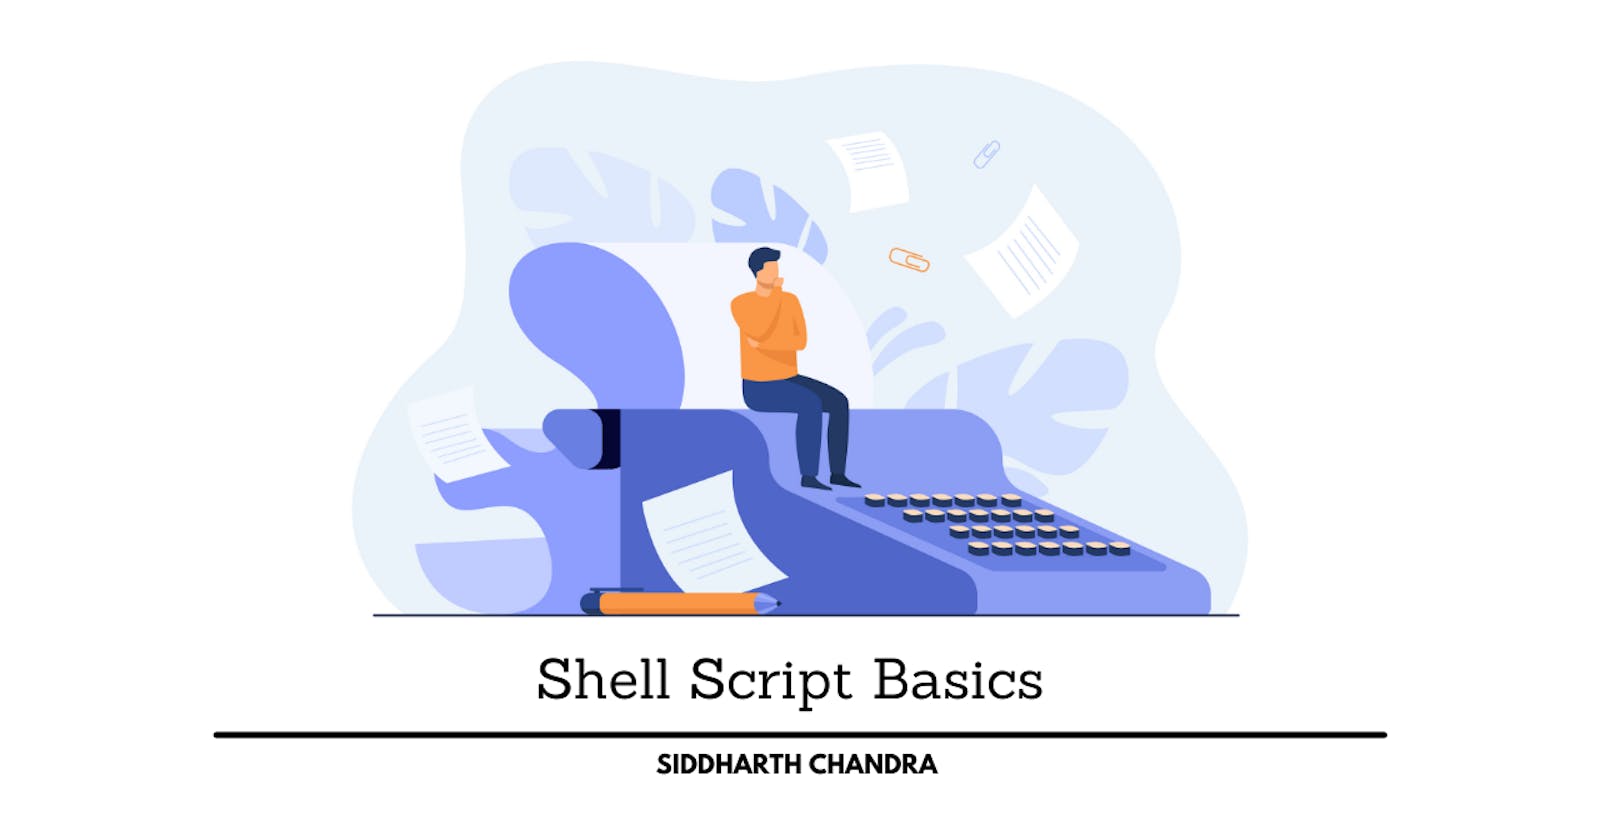 Shell Script Basics